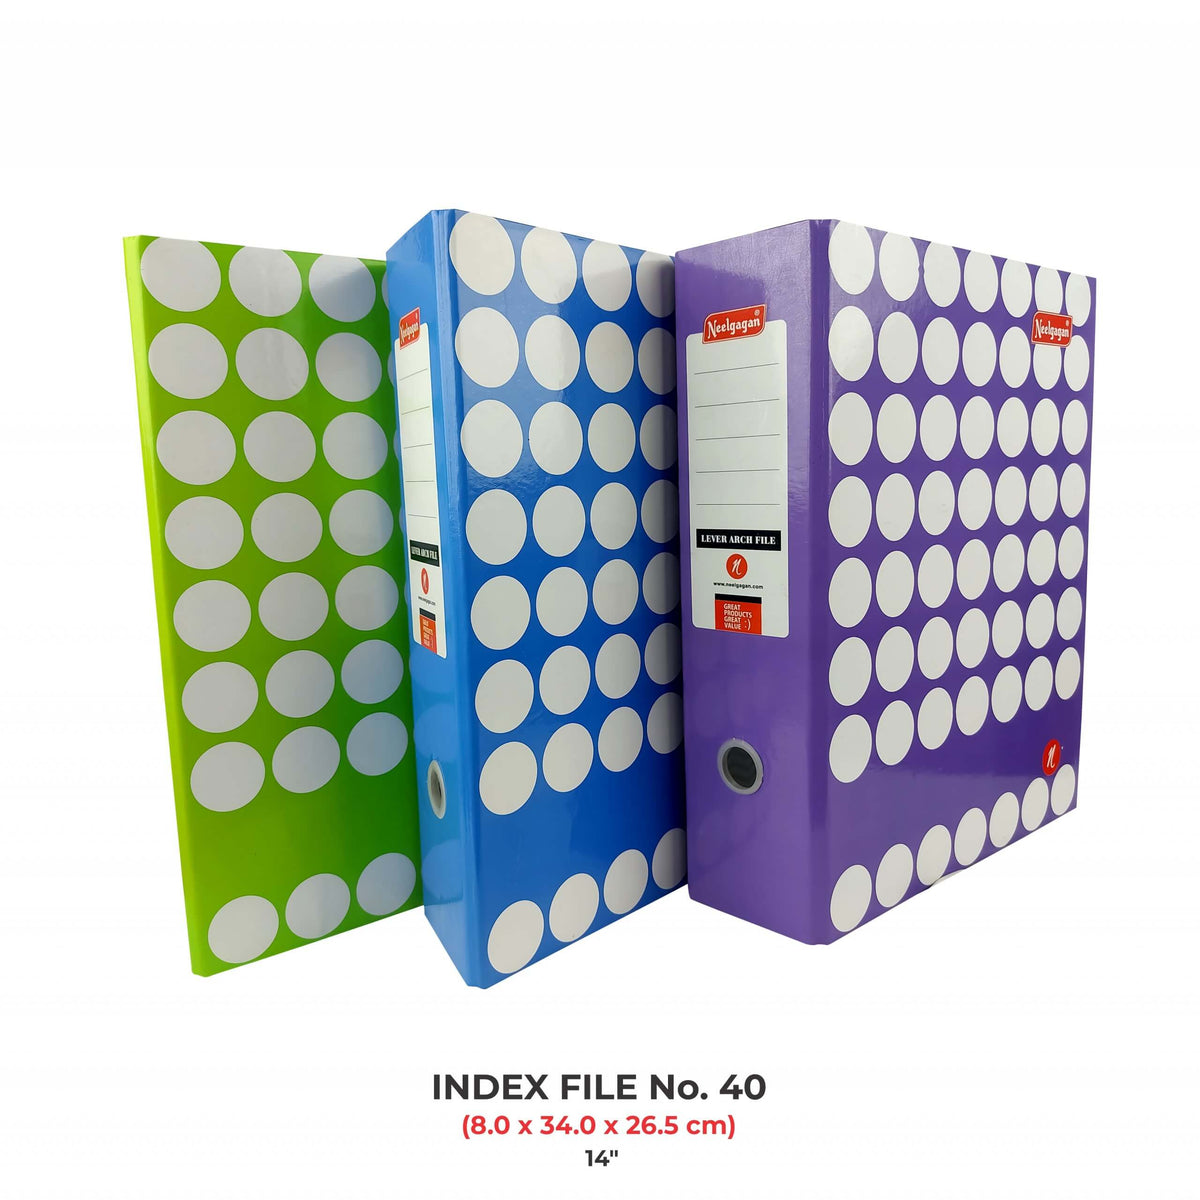 Index File (Printed) (Lever Arch - Box File) No.40 (14 inch)